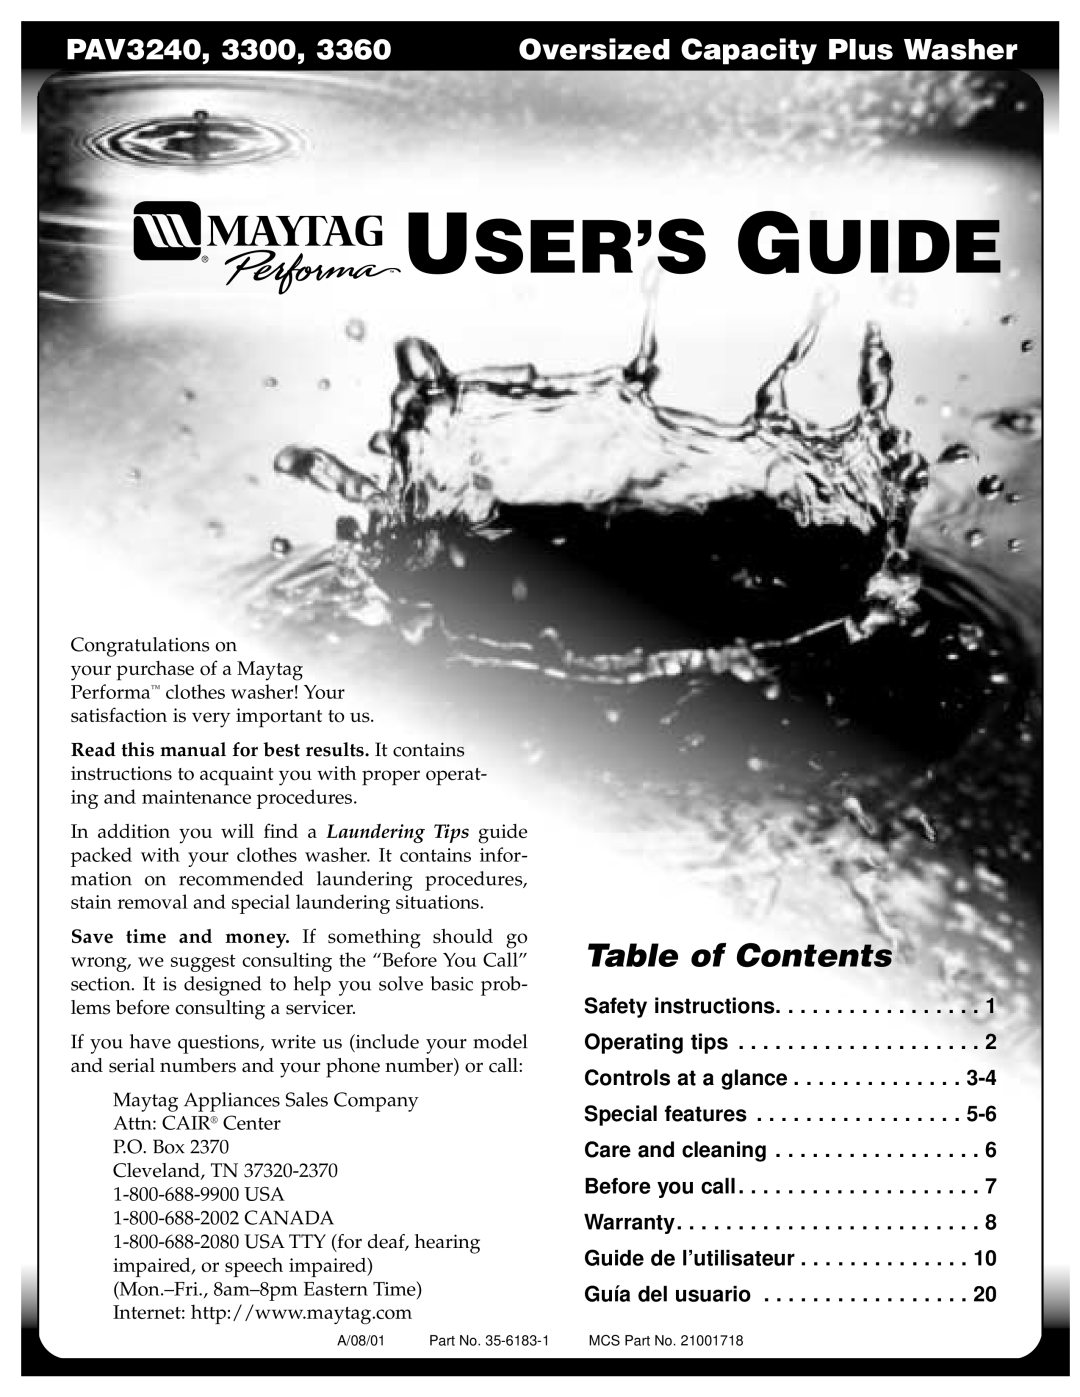 Maytag PAV3360, PAV3300, PAV3240 warranty Table of Contents, User’S Guide 